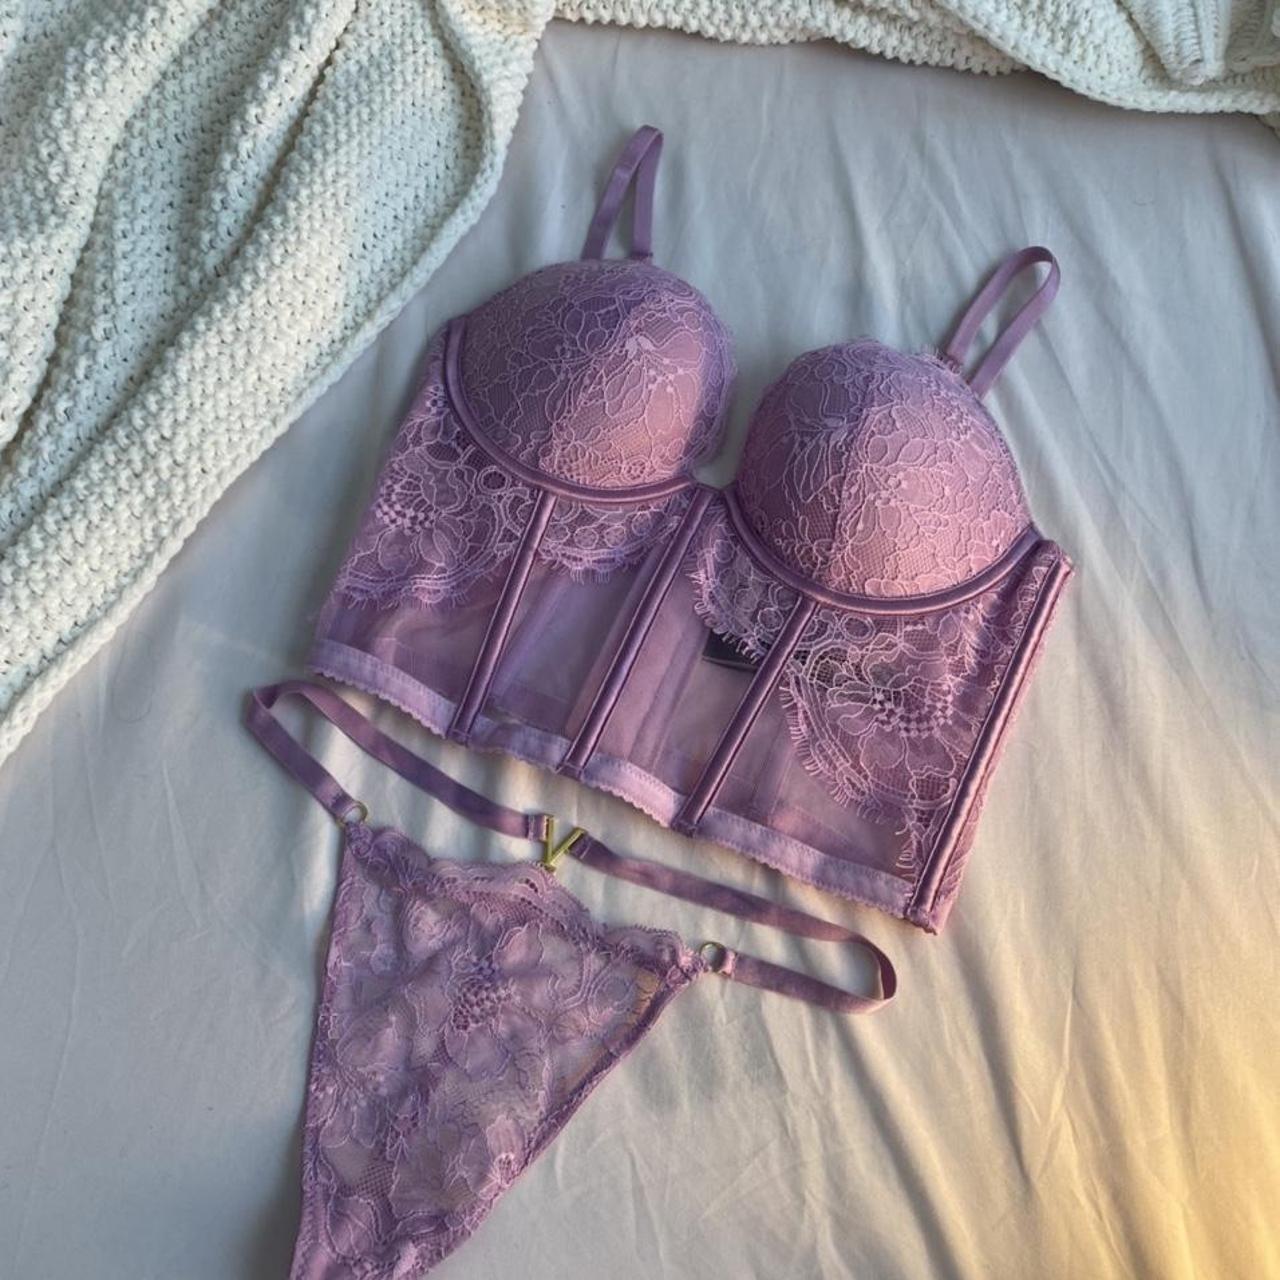 beautiful vs lingerie set 🌸💜💜, never worn/ size 32C